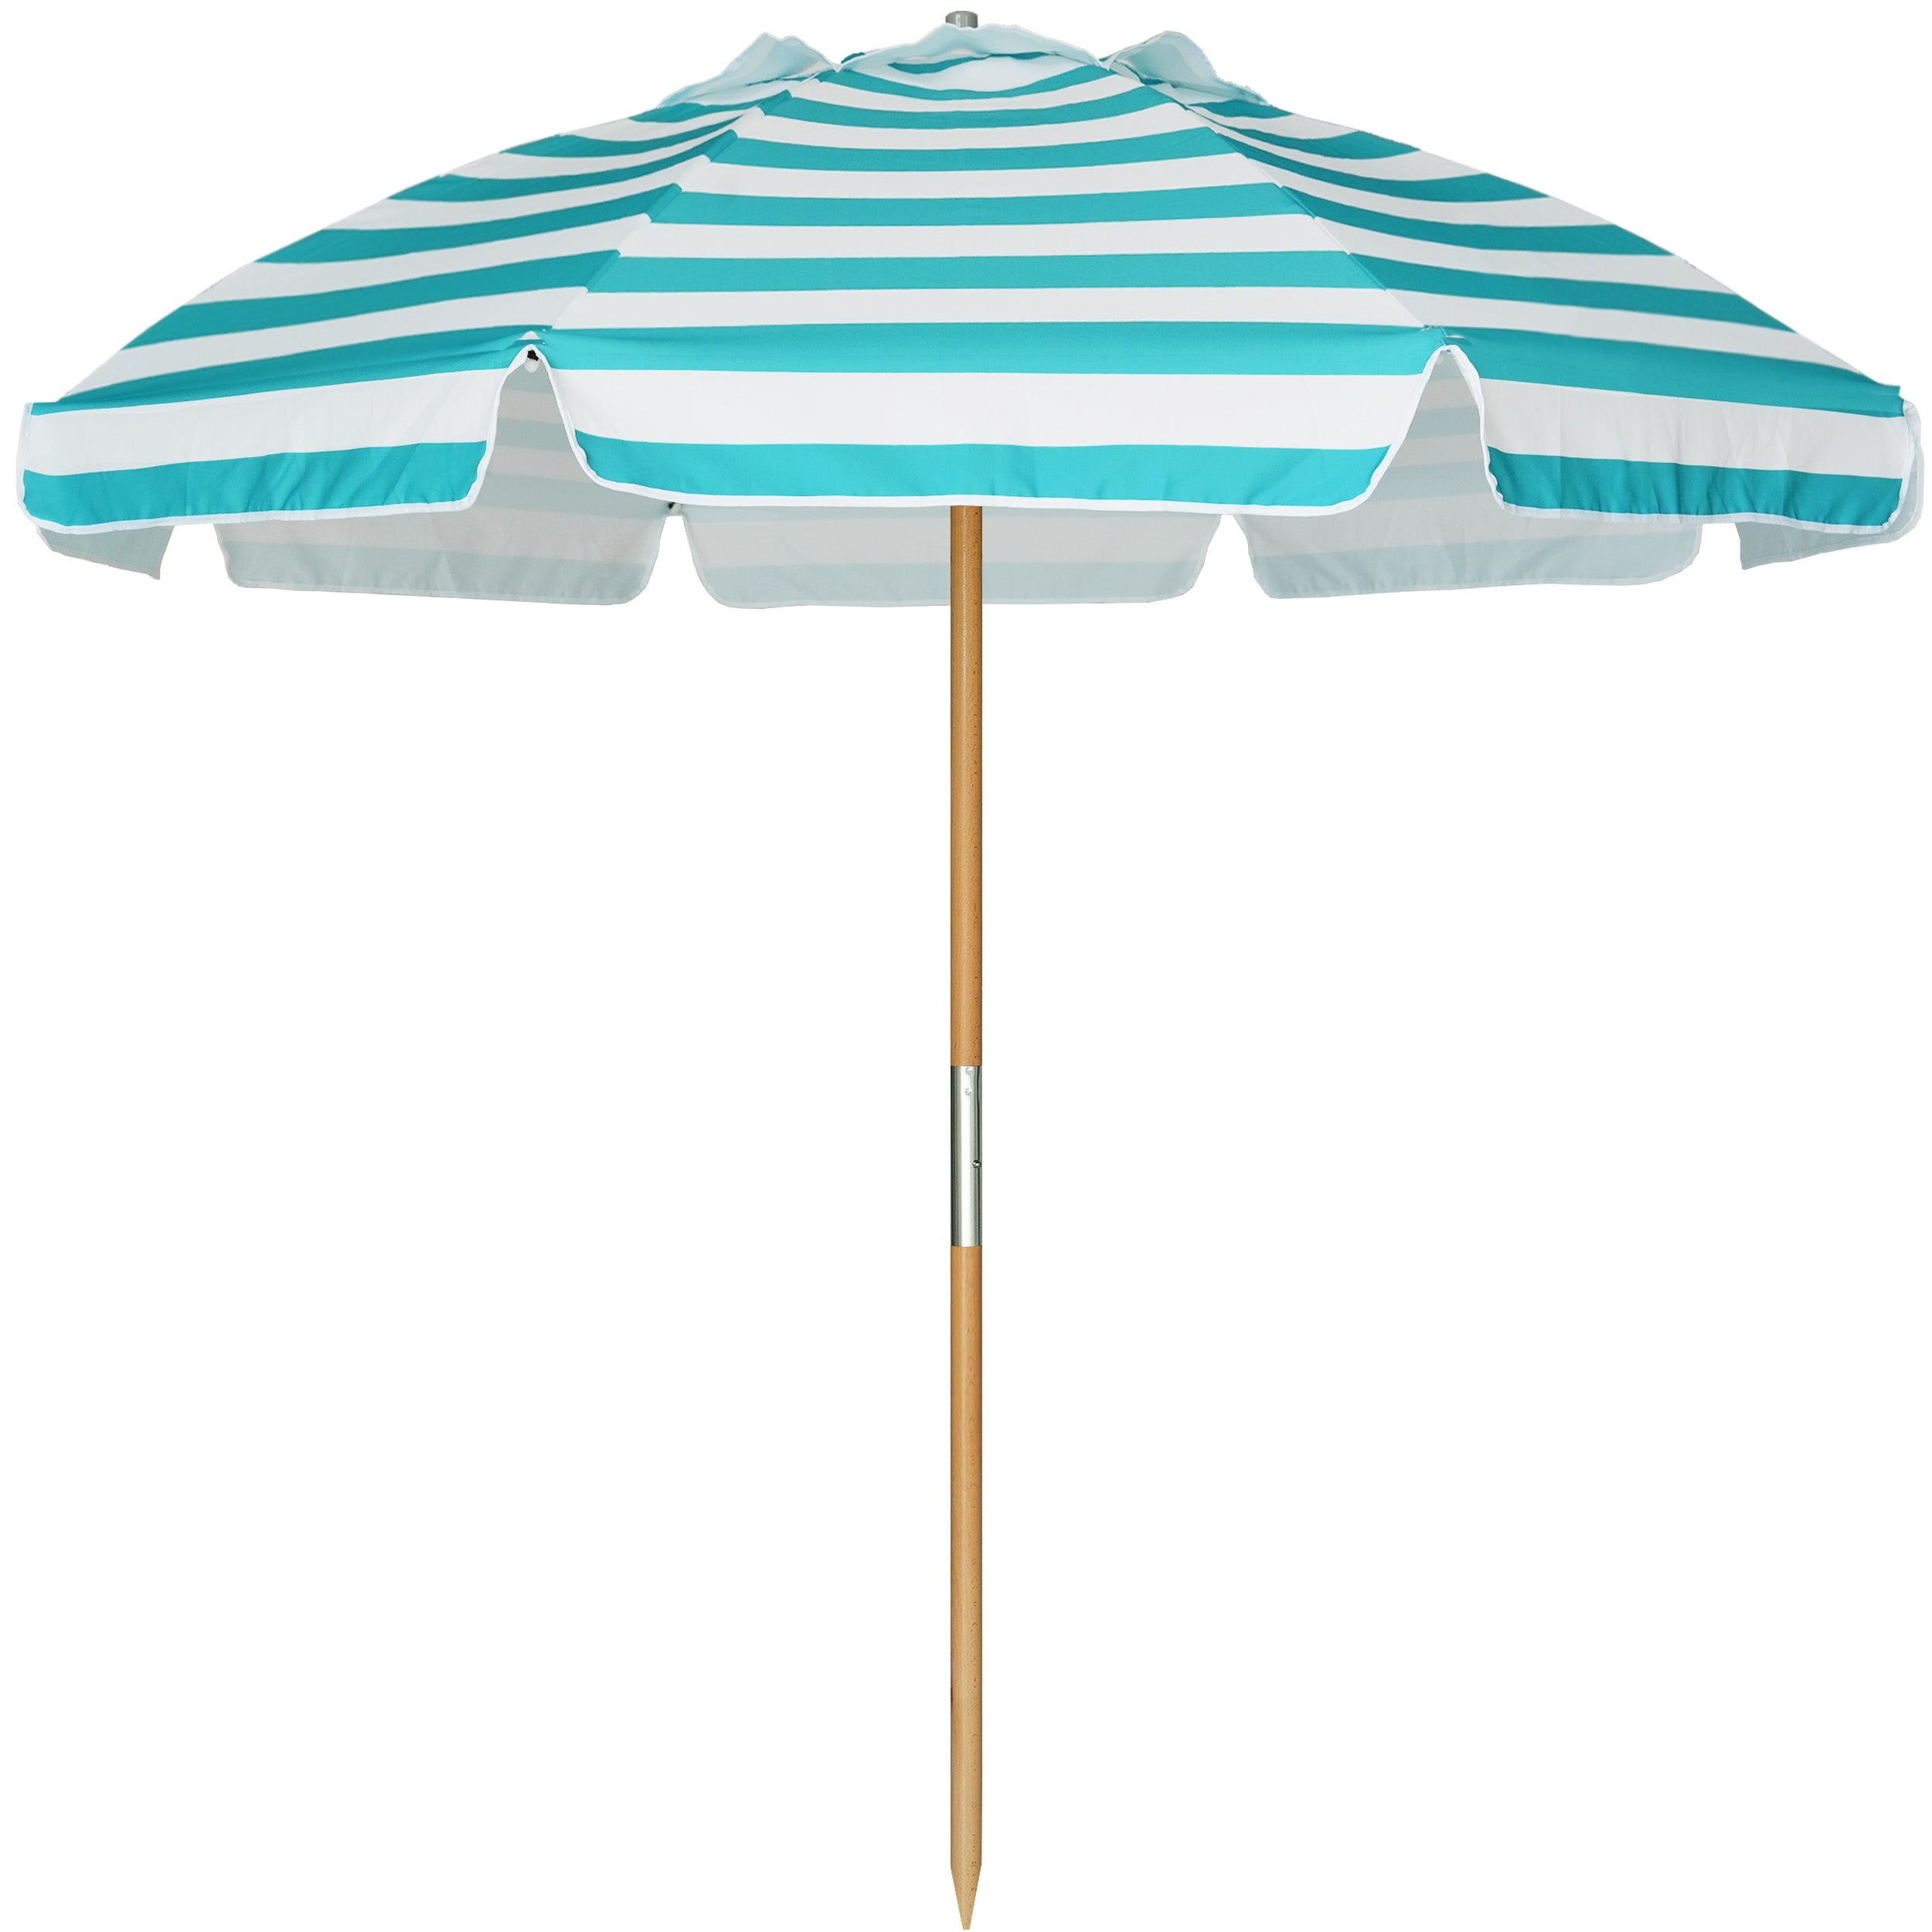 AMMSUN 7.5ft Heavy Duty HIGH Wind Beach Umbrella Commercial Grade Patio Beach Umbrella with Air Vent Ash Wood Pole & Carry Bag UV 50+ Protection Stripe Teal White